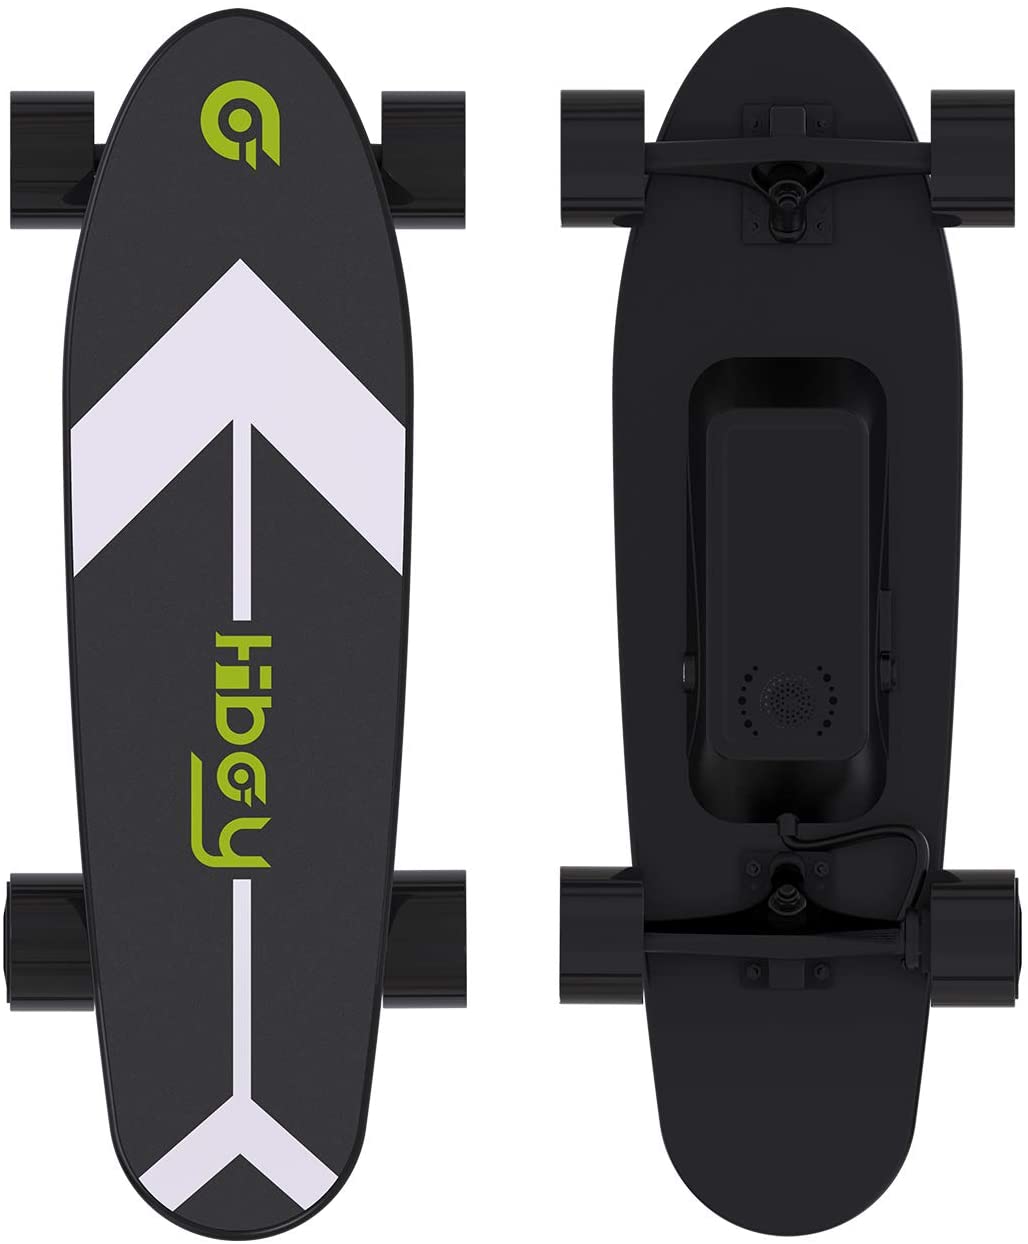 4. Hiboy S11 Electric Skateboard